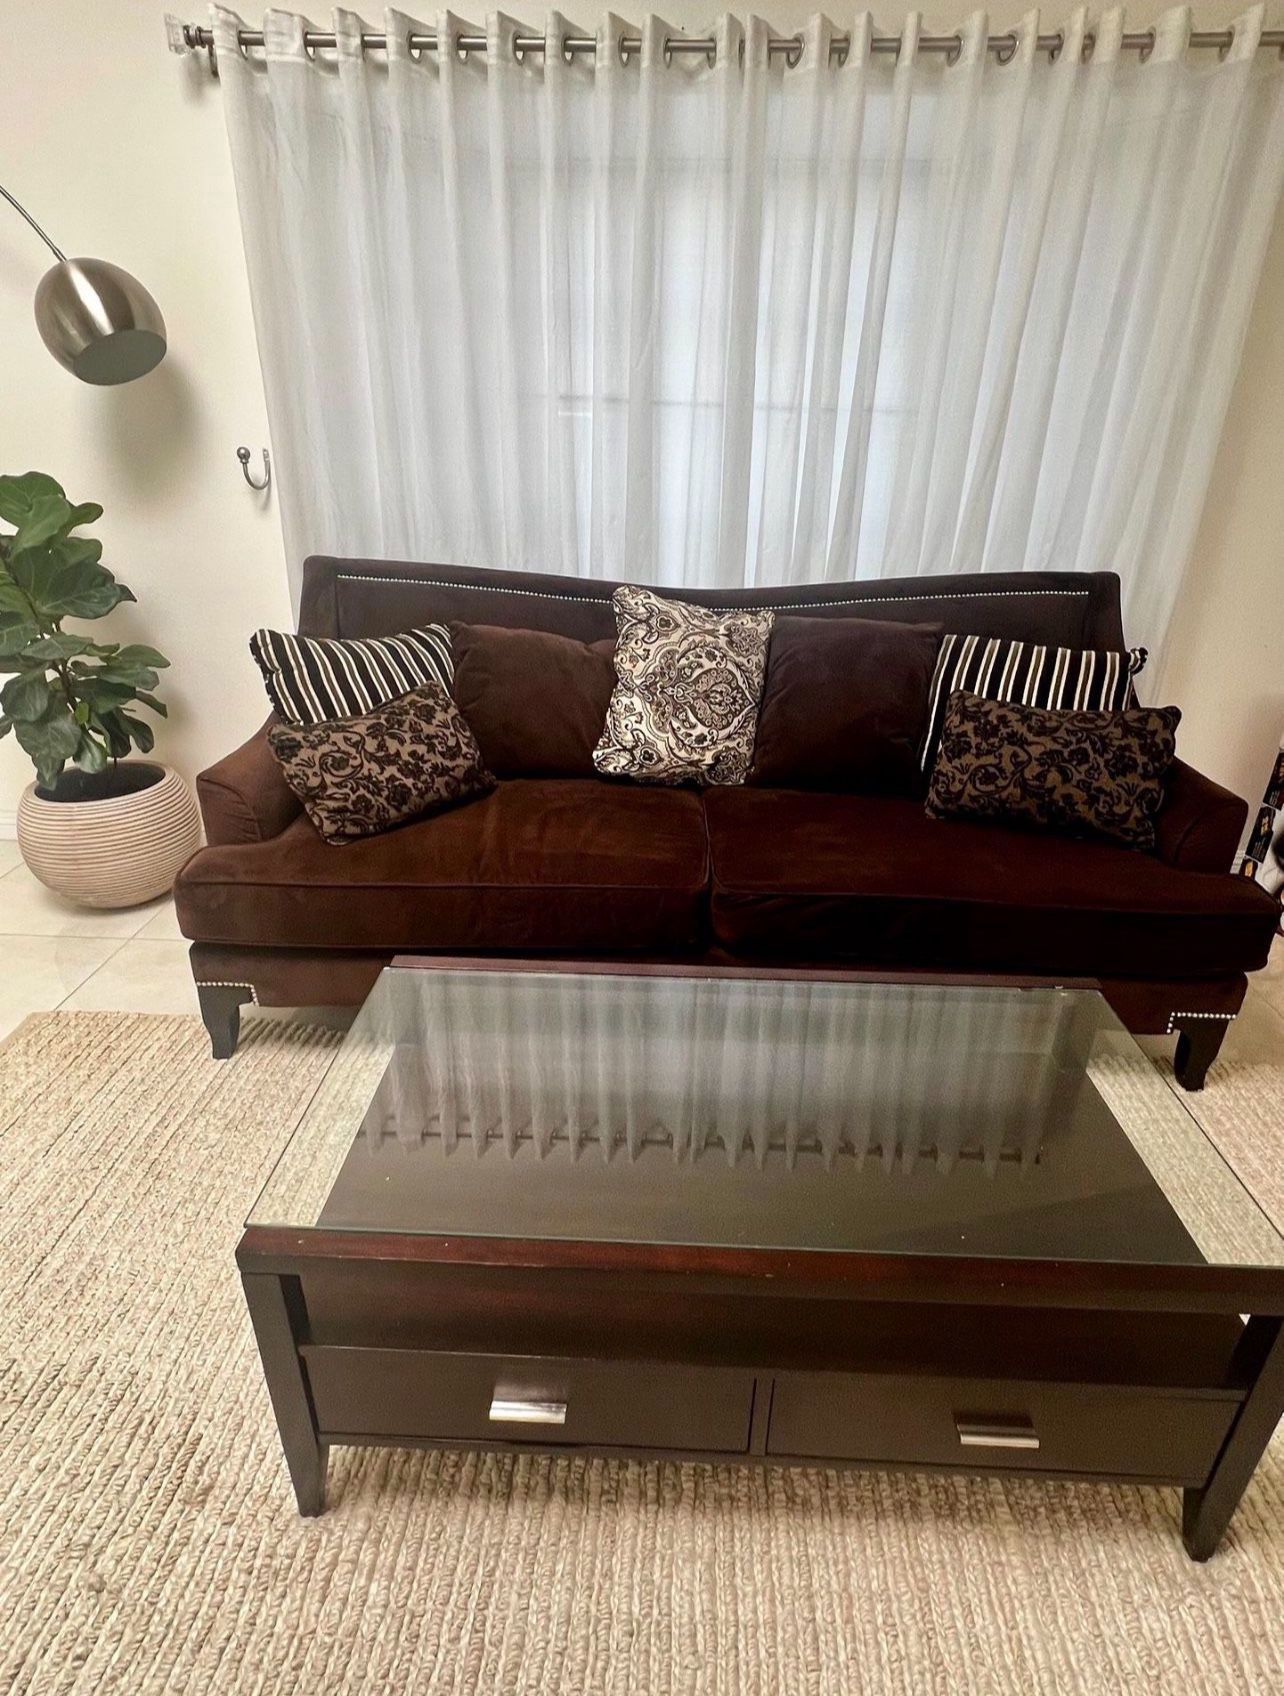 5 Piece Wood Furniture- Sofa, Loveseat, Chair, Coffee & Side Table